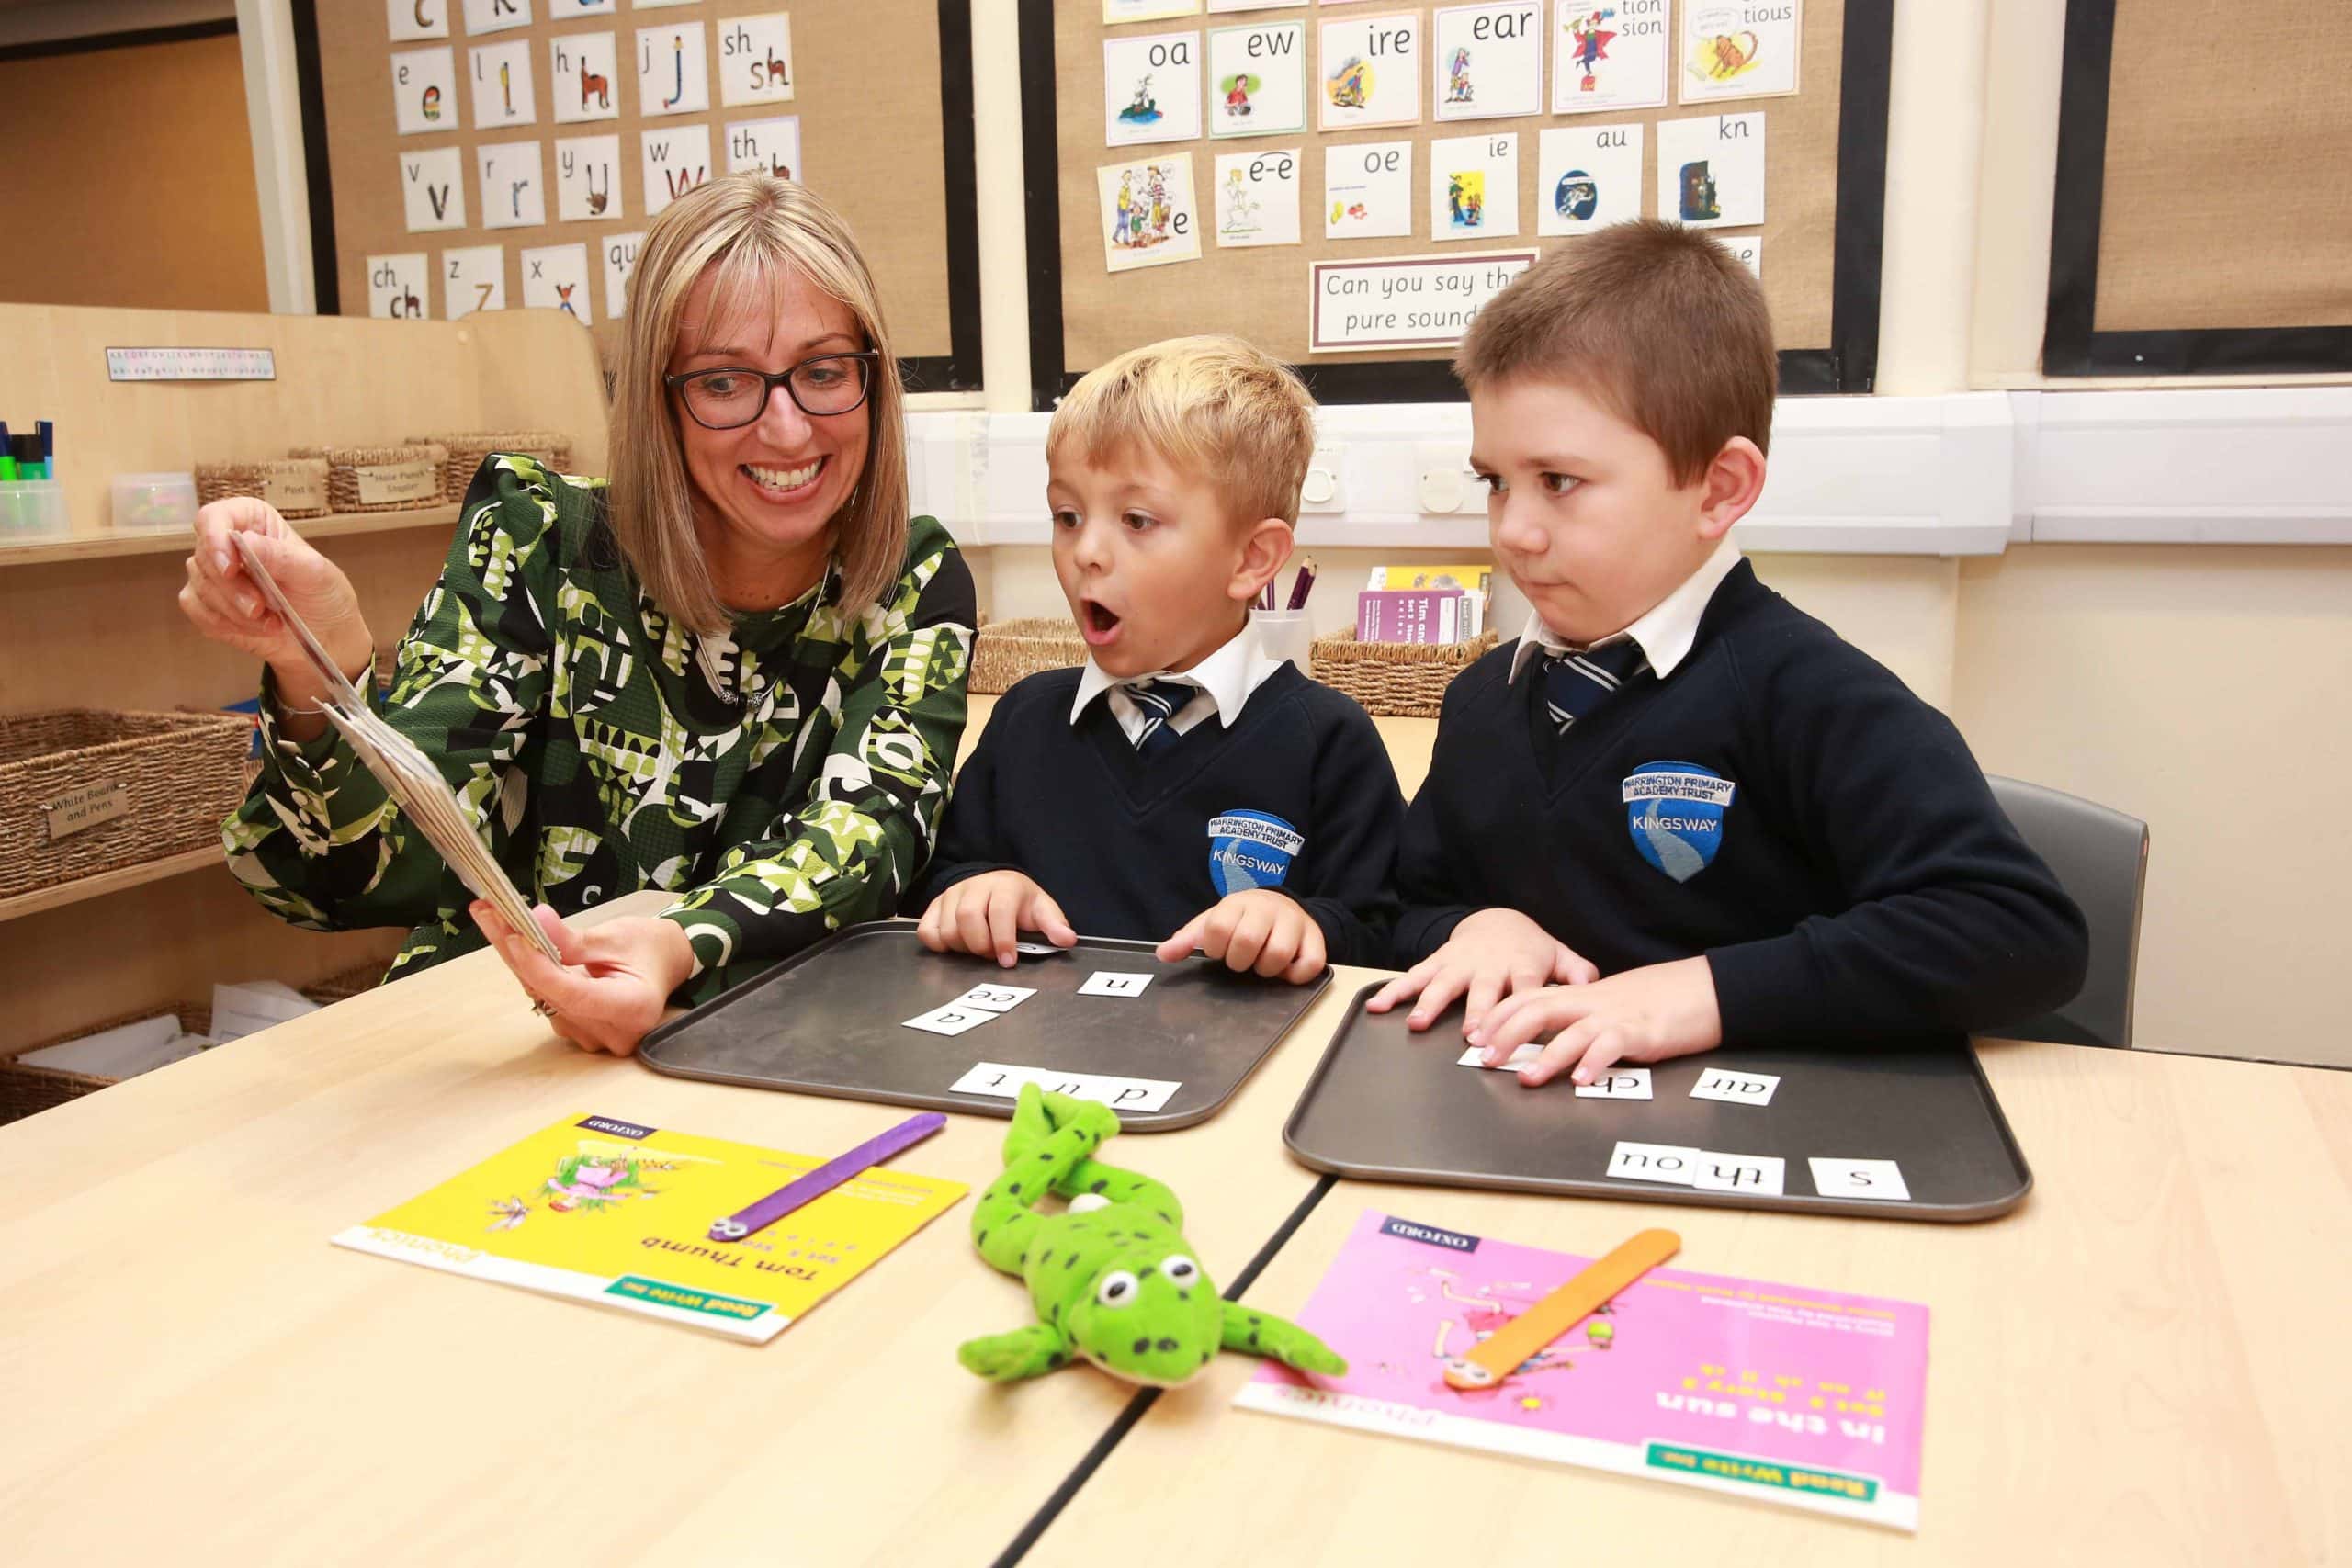 Warrington Primary Academy Trust teacher with children in a classroom